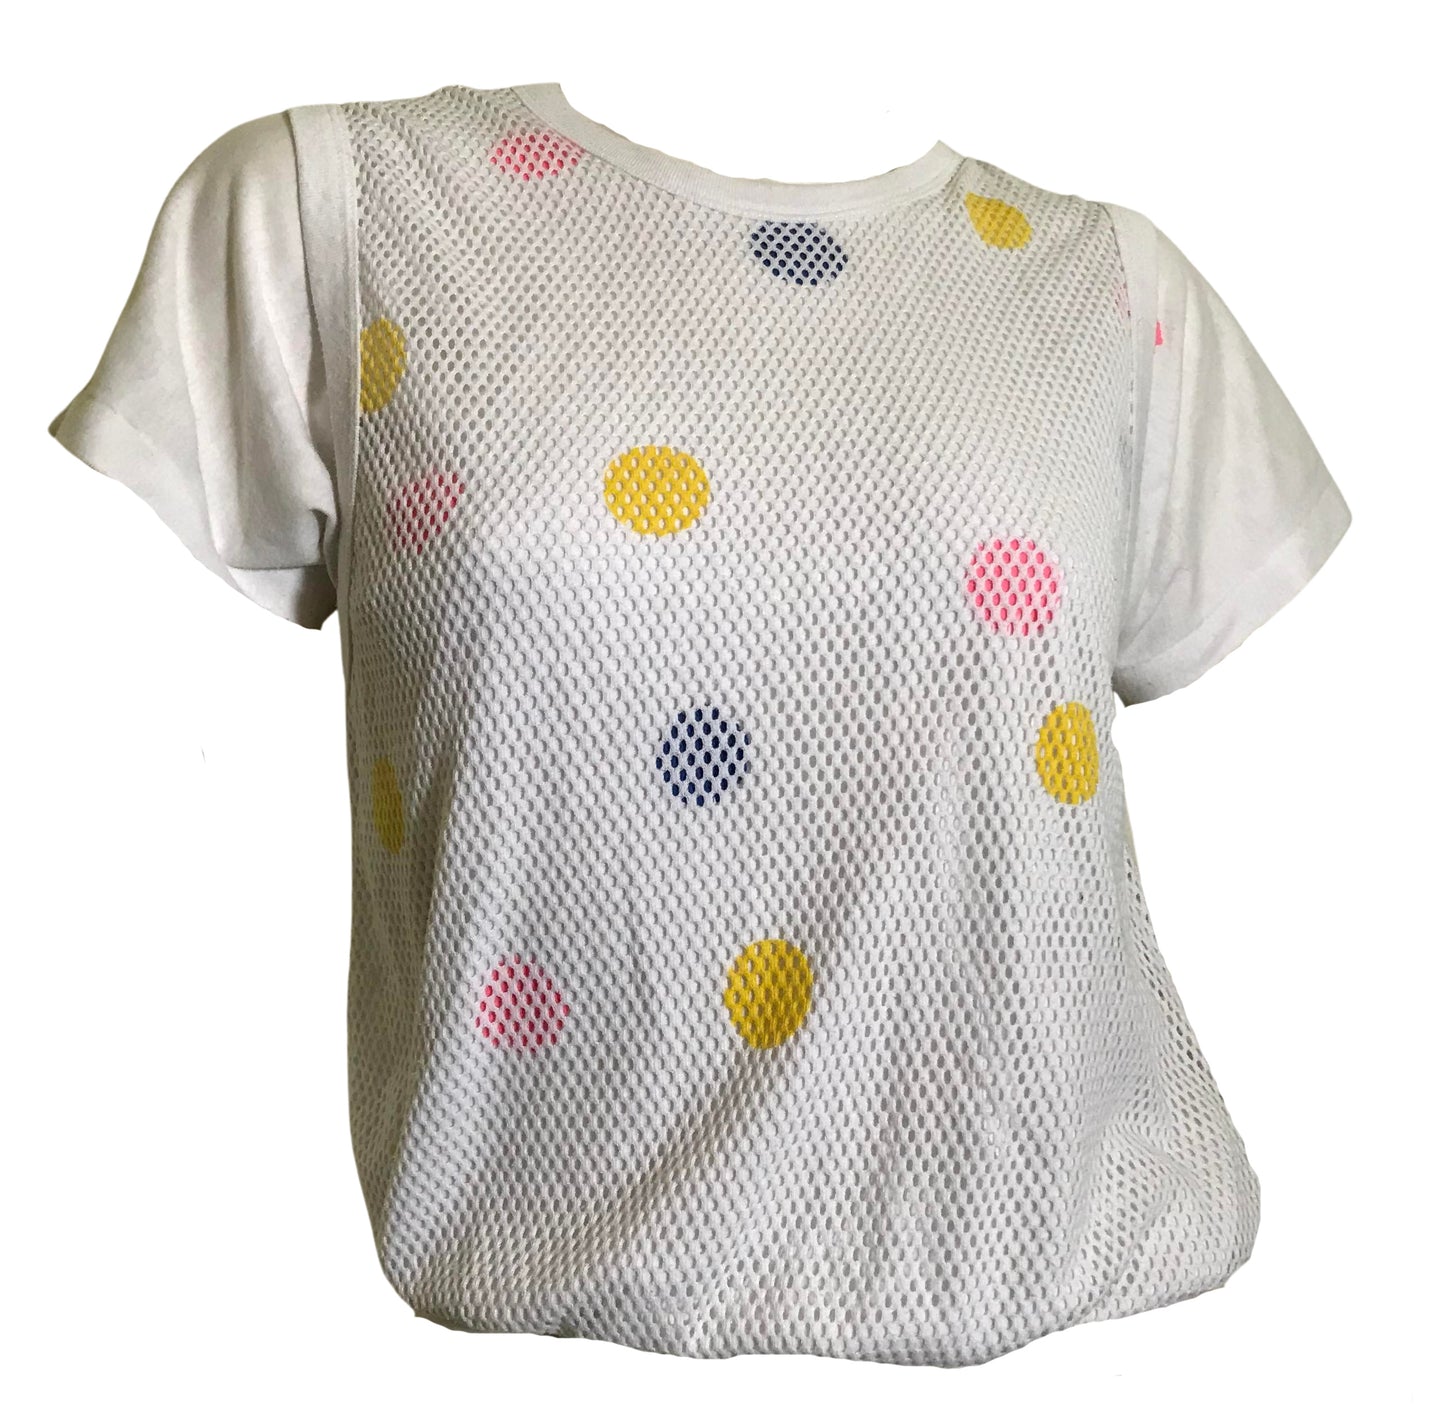 Polka Dot Knit Tee Shirt with White Mesh Overlay circa 1980s